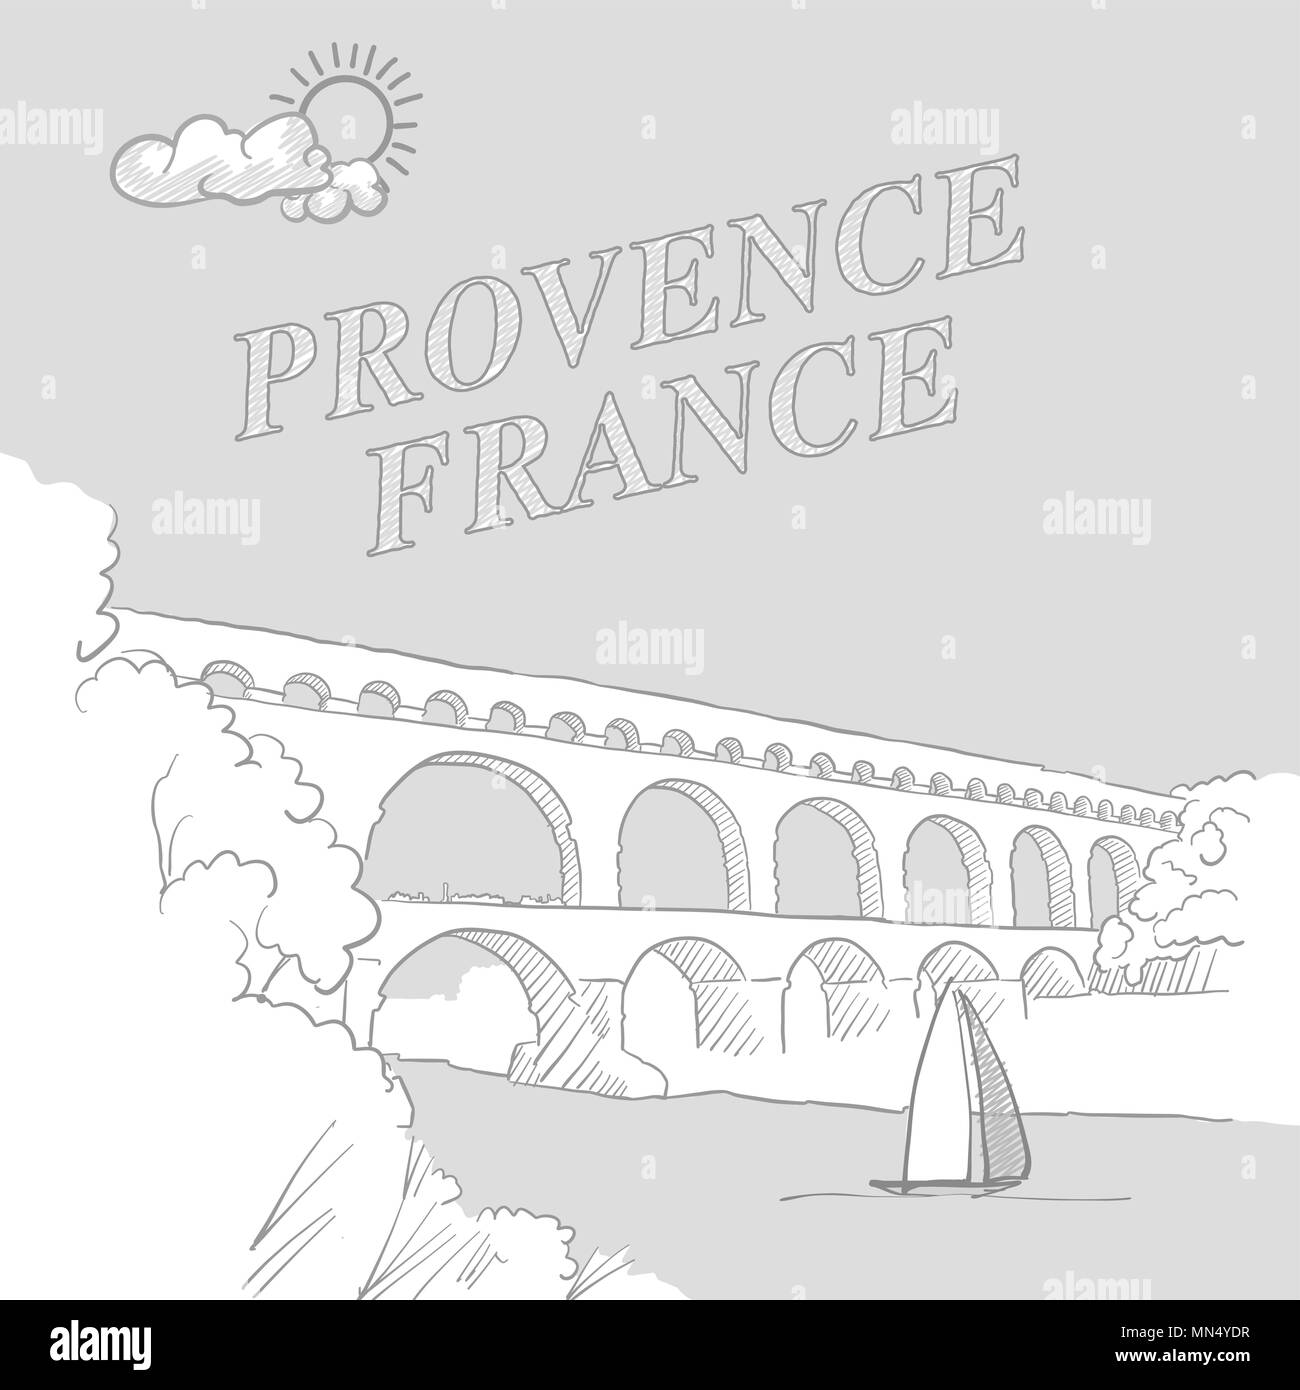 Provence, Frankreich reisen, Marketing, Hand gezeichnet Vektor Skizze Stock Vektor